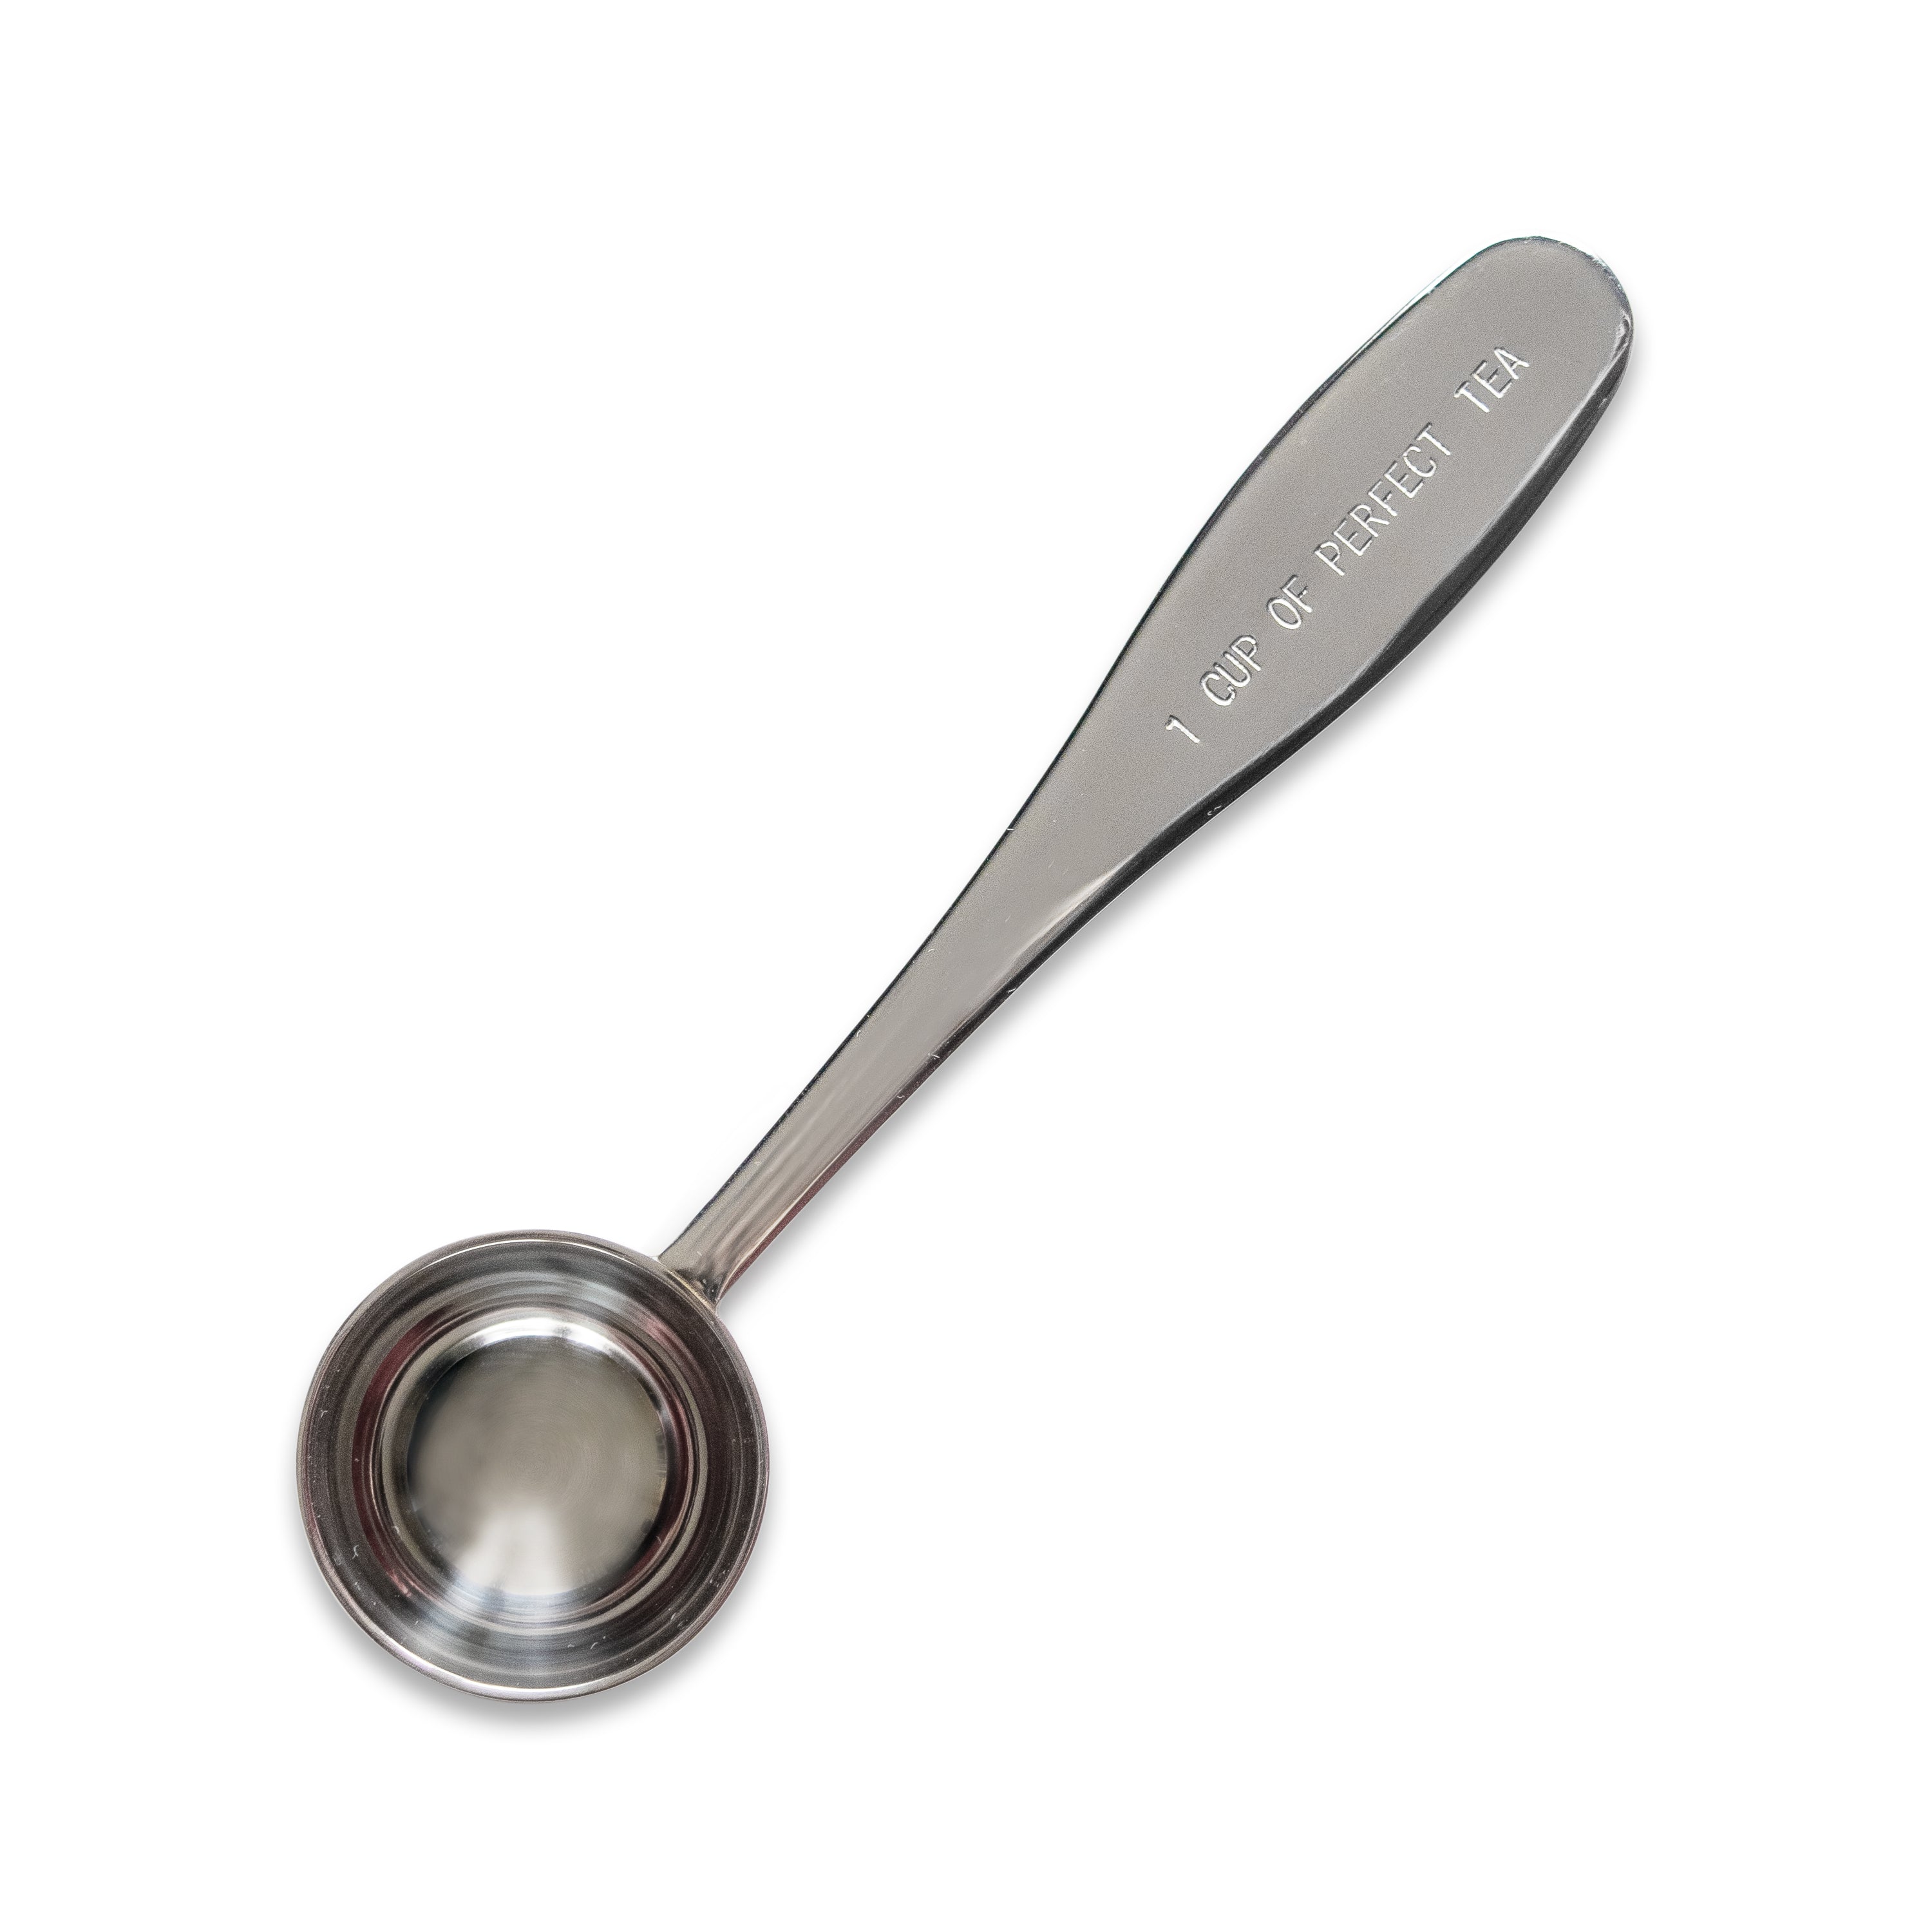 1 Tsp Measuring Spoon - Samovar Tea